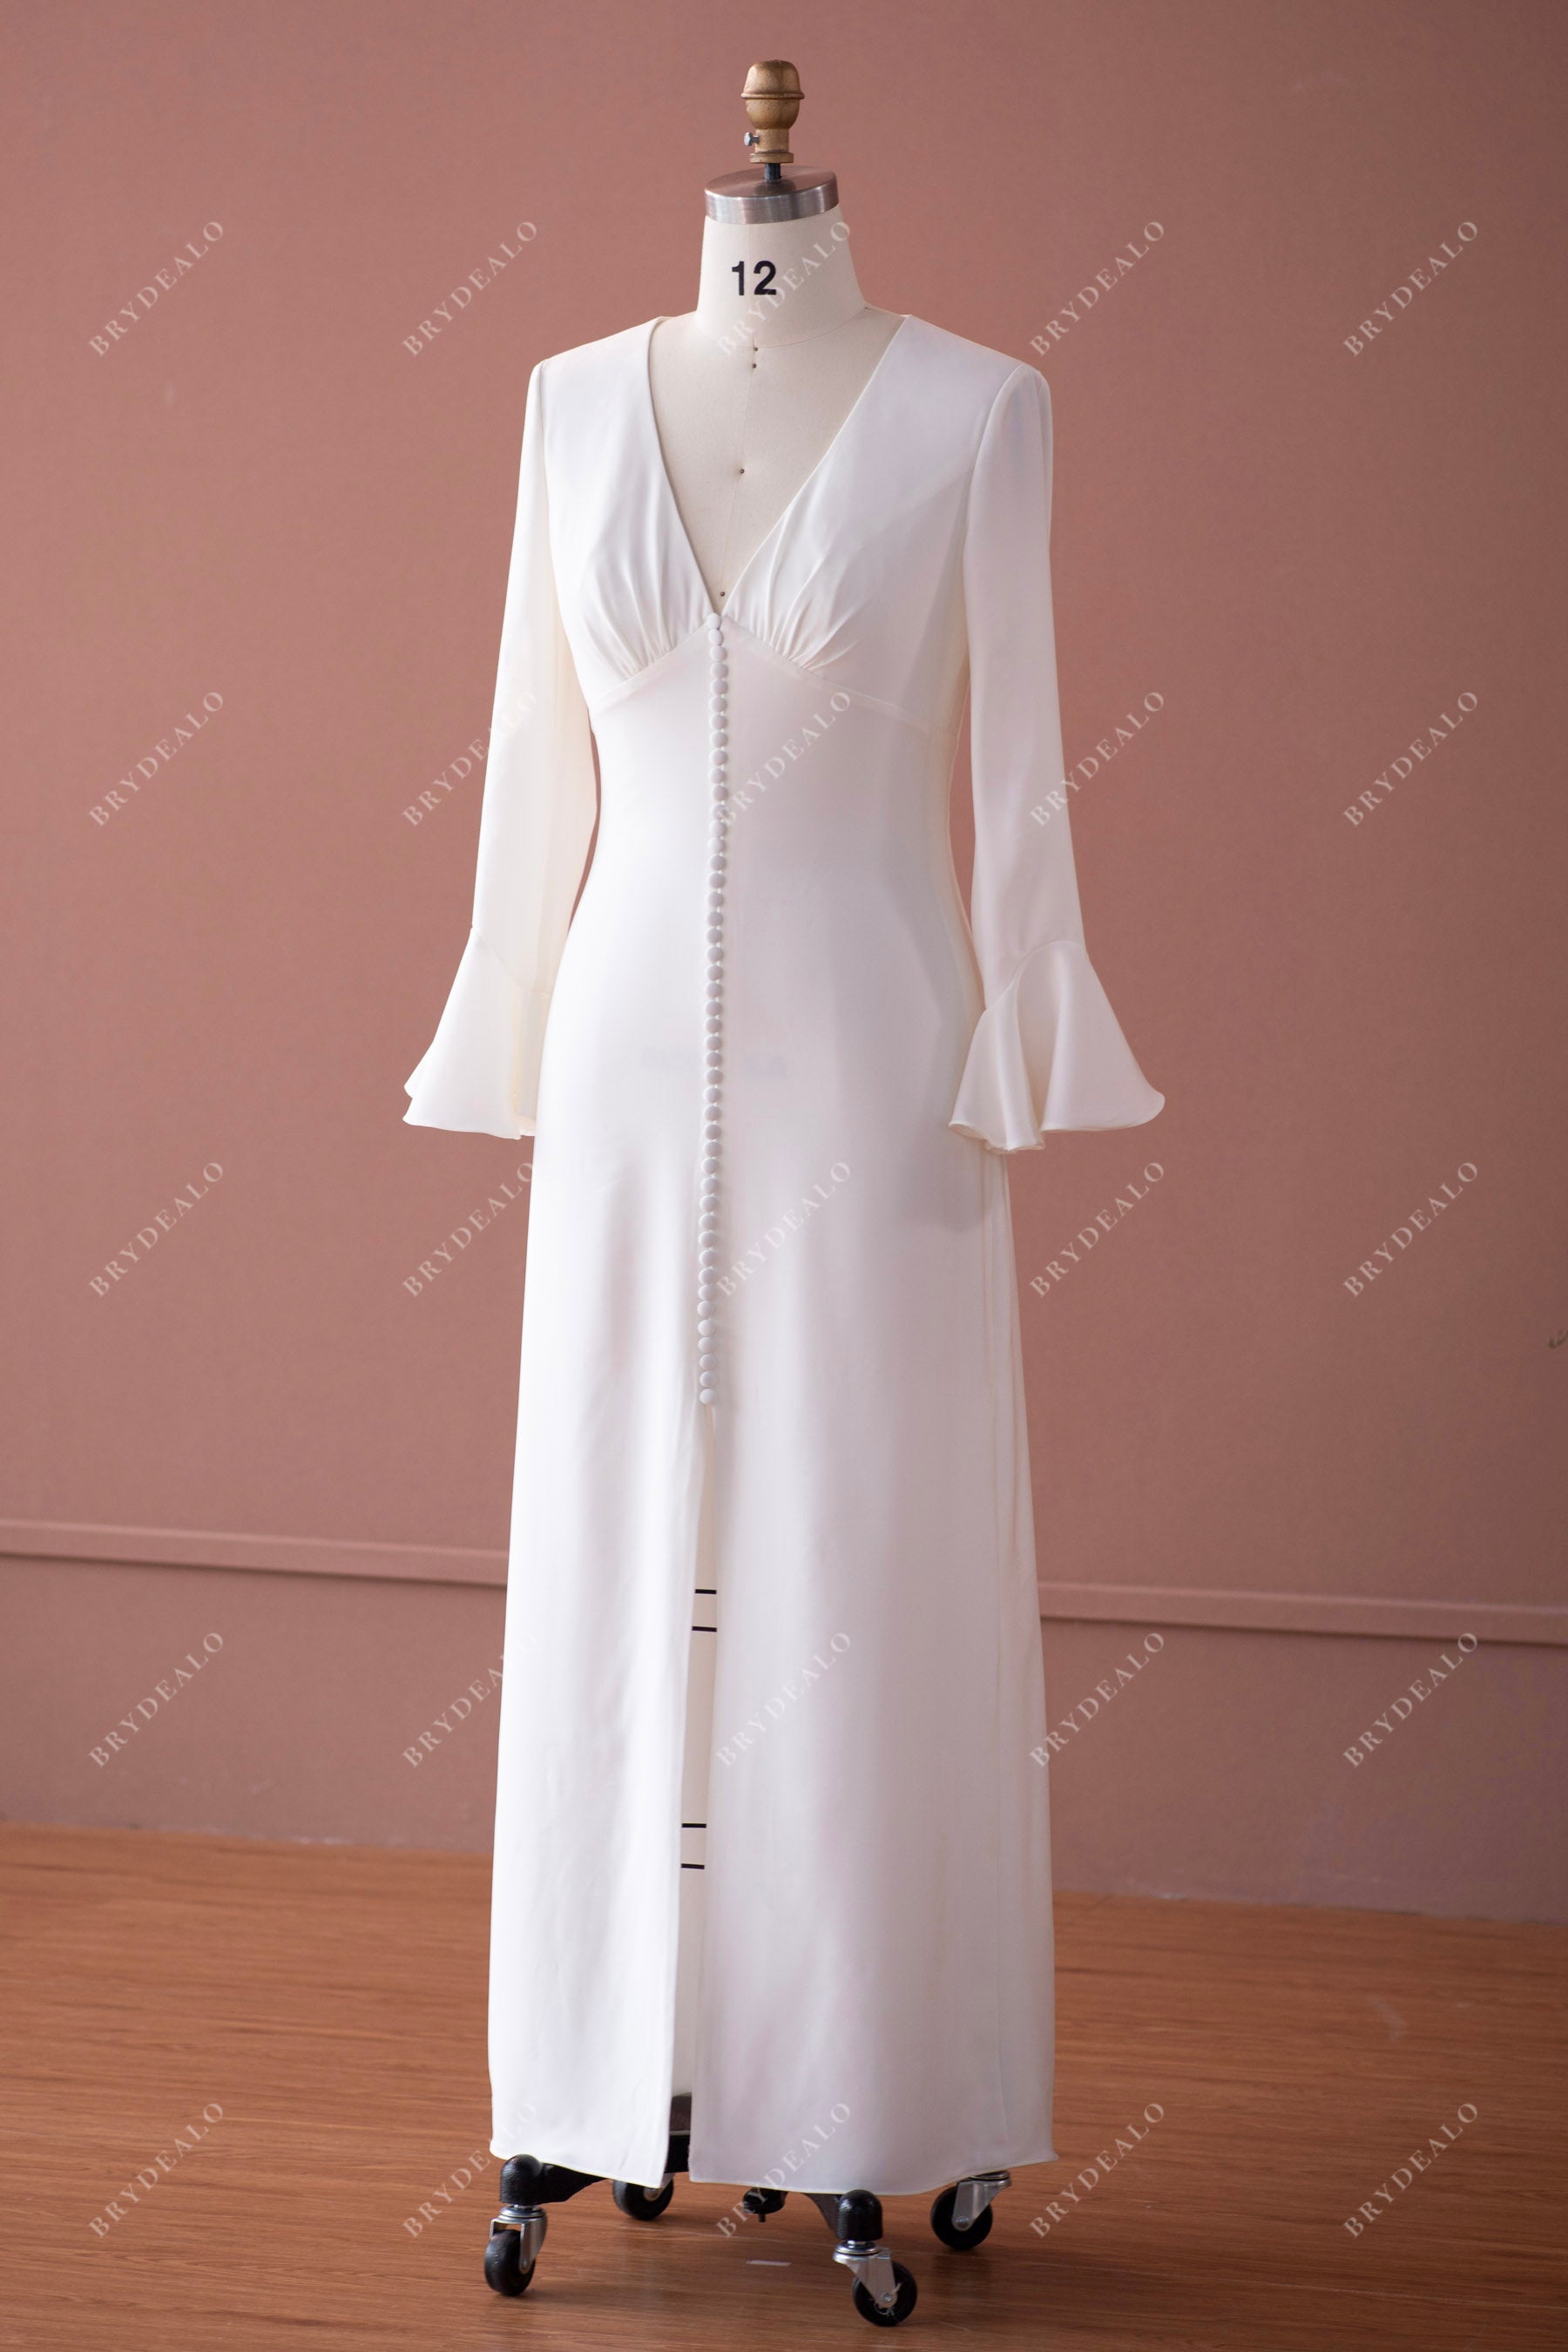 bell sleeved satin wedding dress